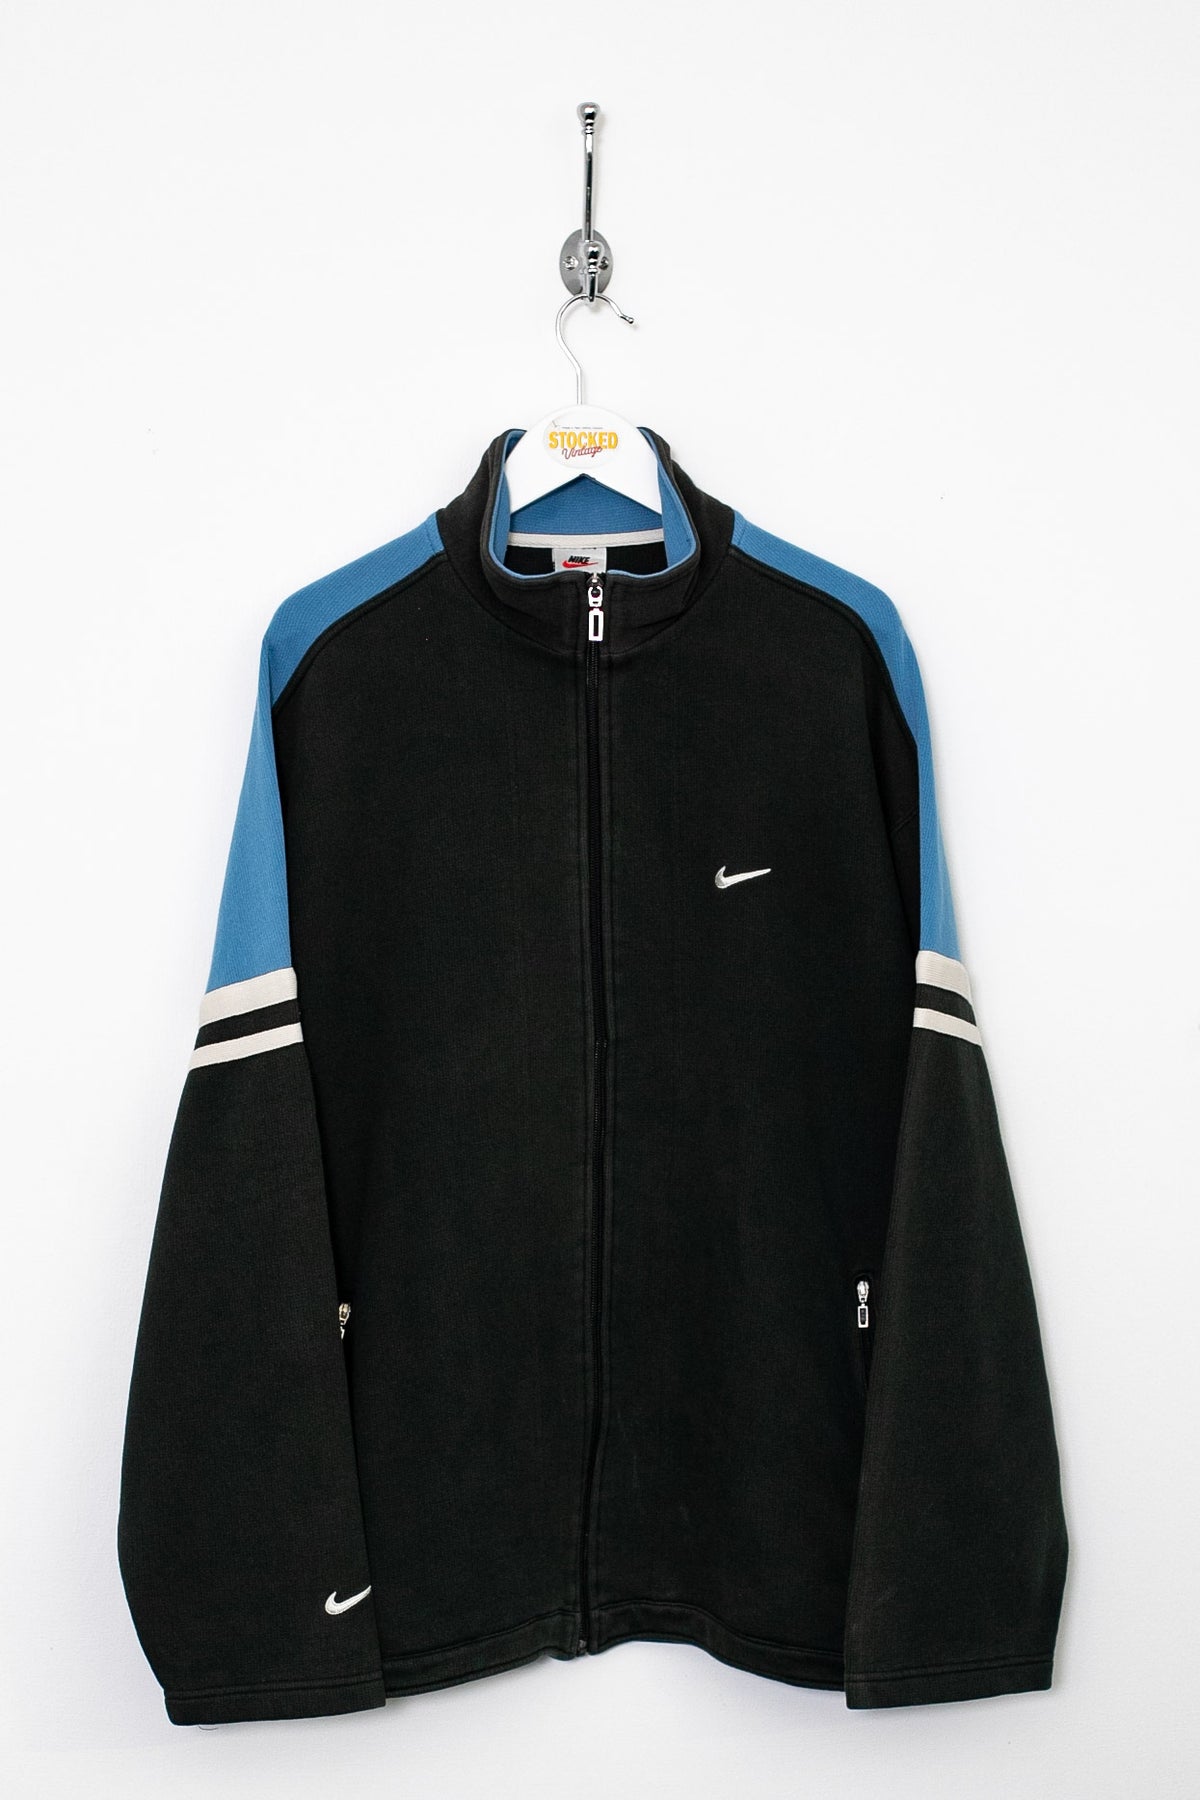 90s Nike Zipped Sweatshirt (L)